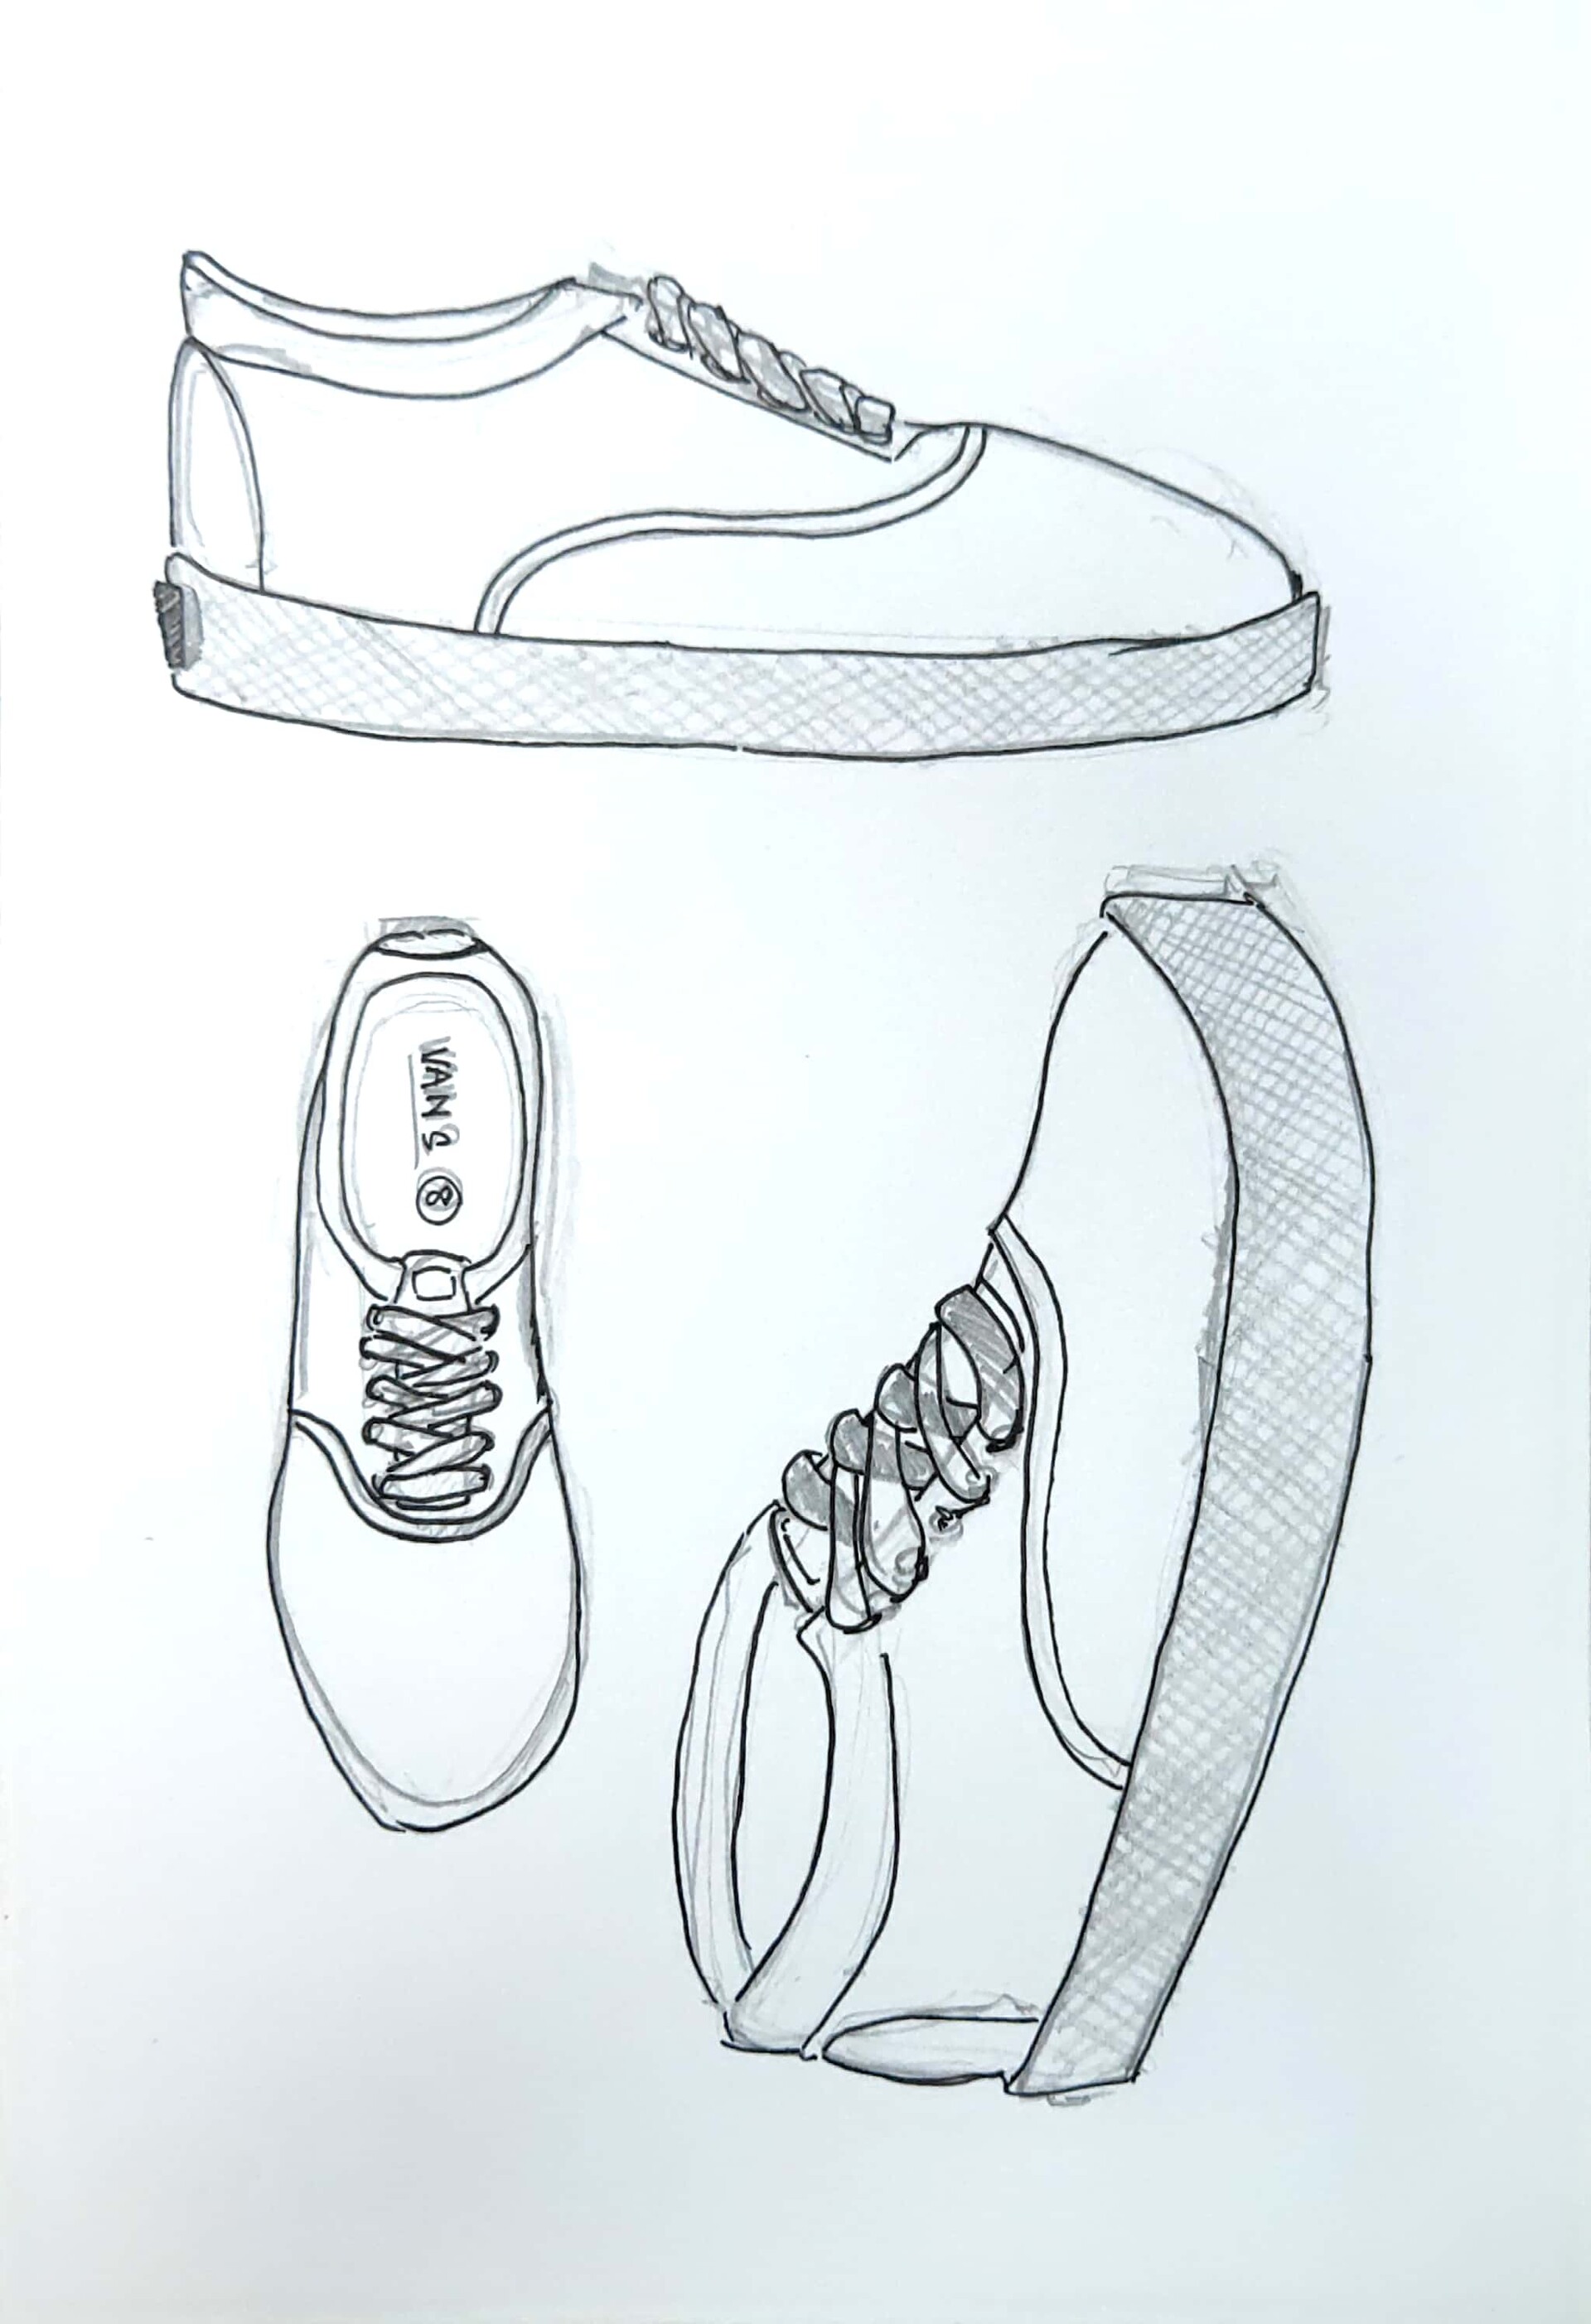 vans shoes sketch